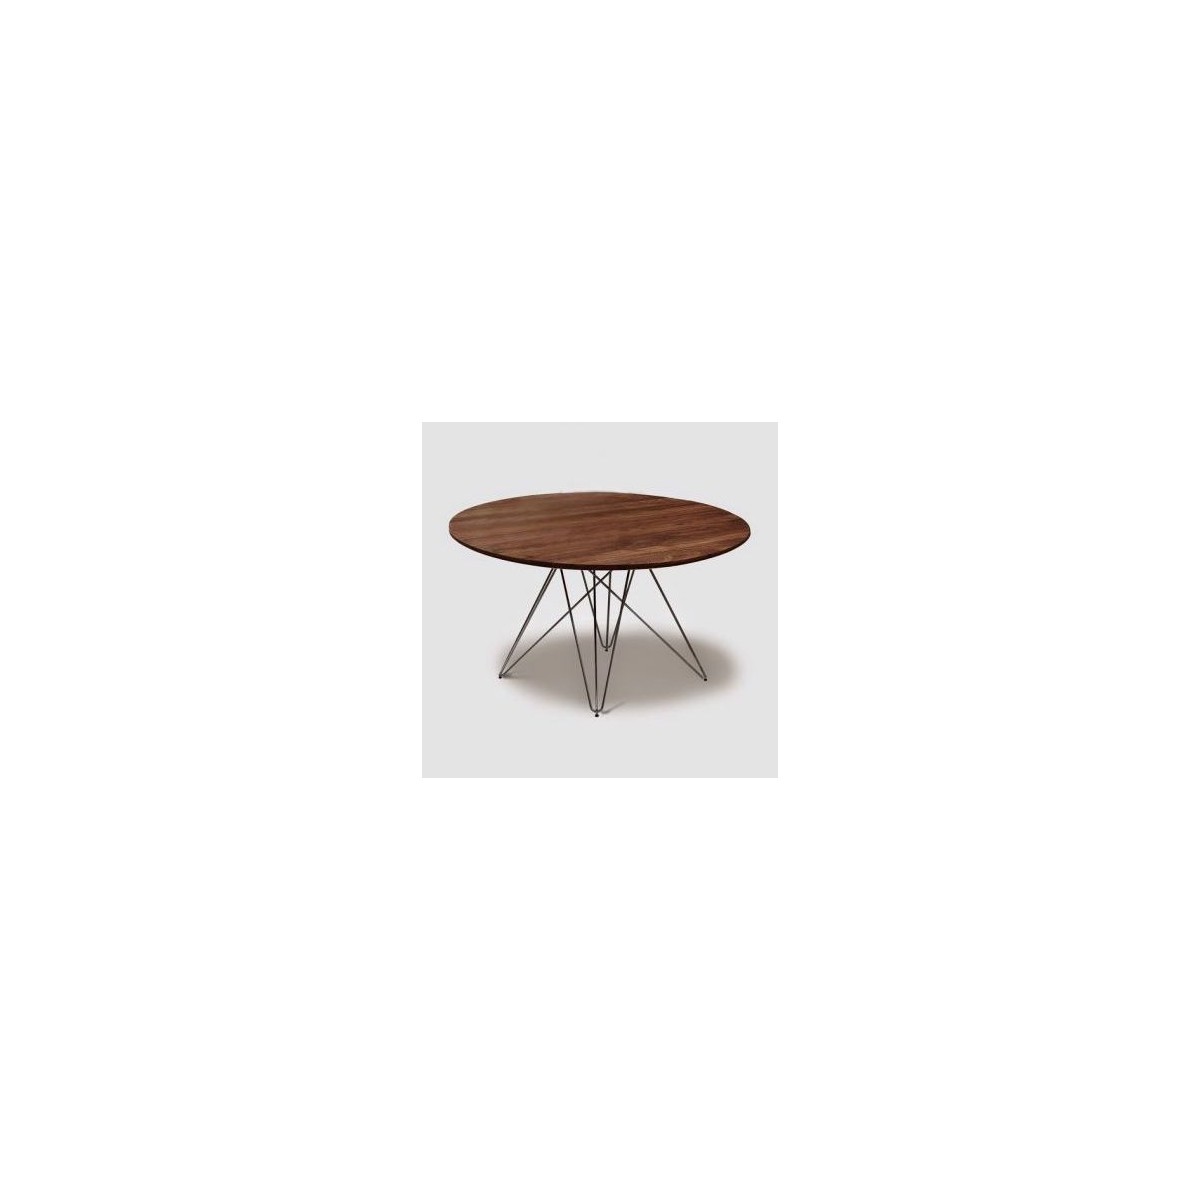 GM3881 - Spider Table Ø120 cm – Corian tabletop